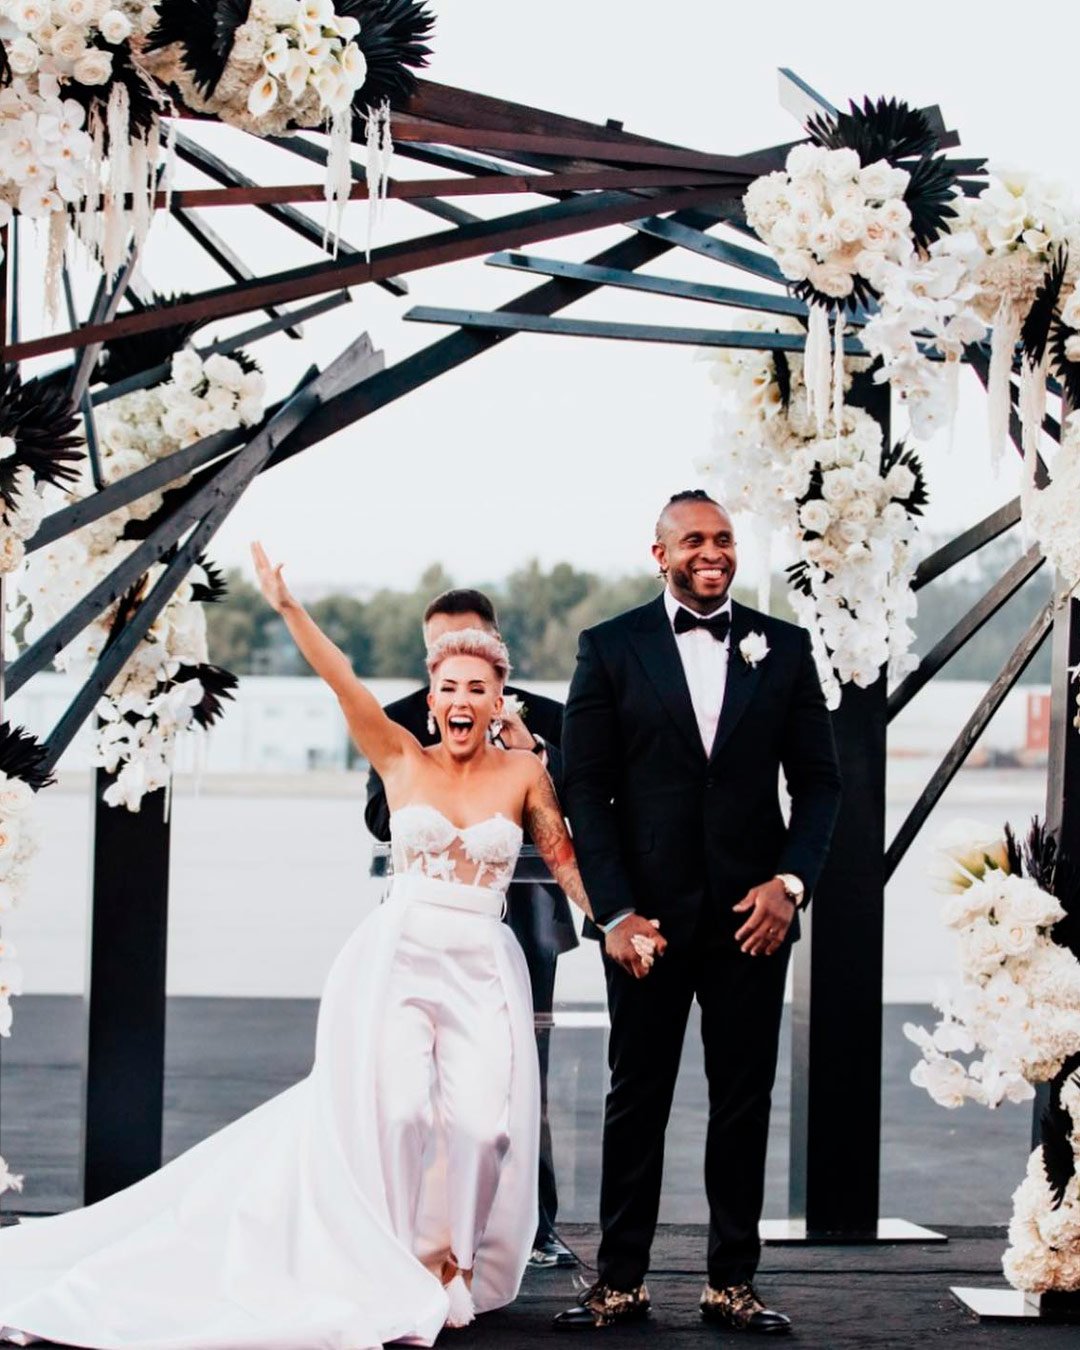 black white wedding colors bride groom aisle arch